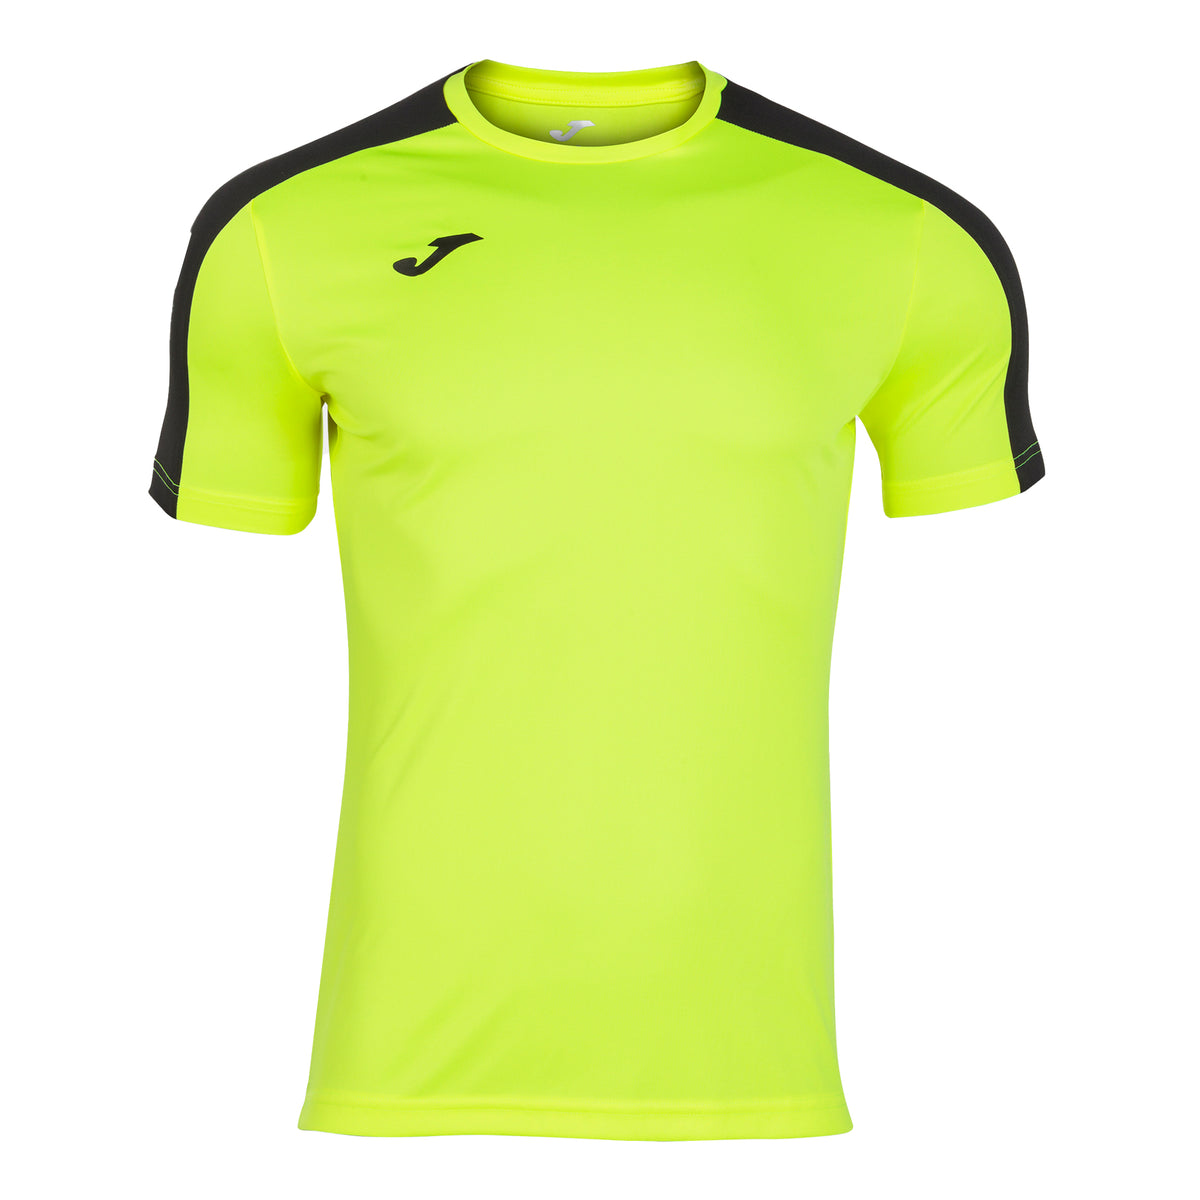 Joma Academy III Junior S/S Football Shirt: Fluor Yellow/Black